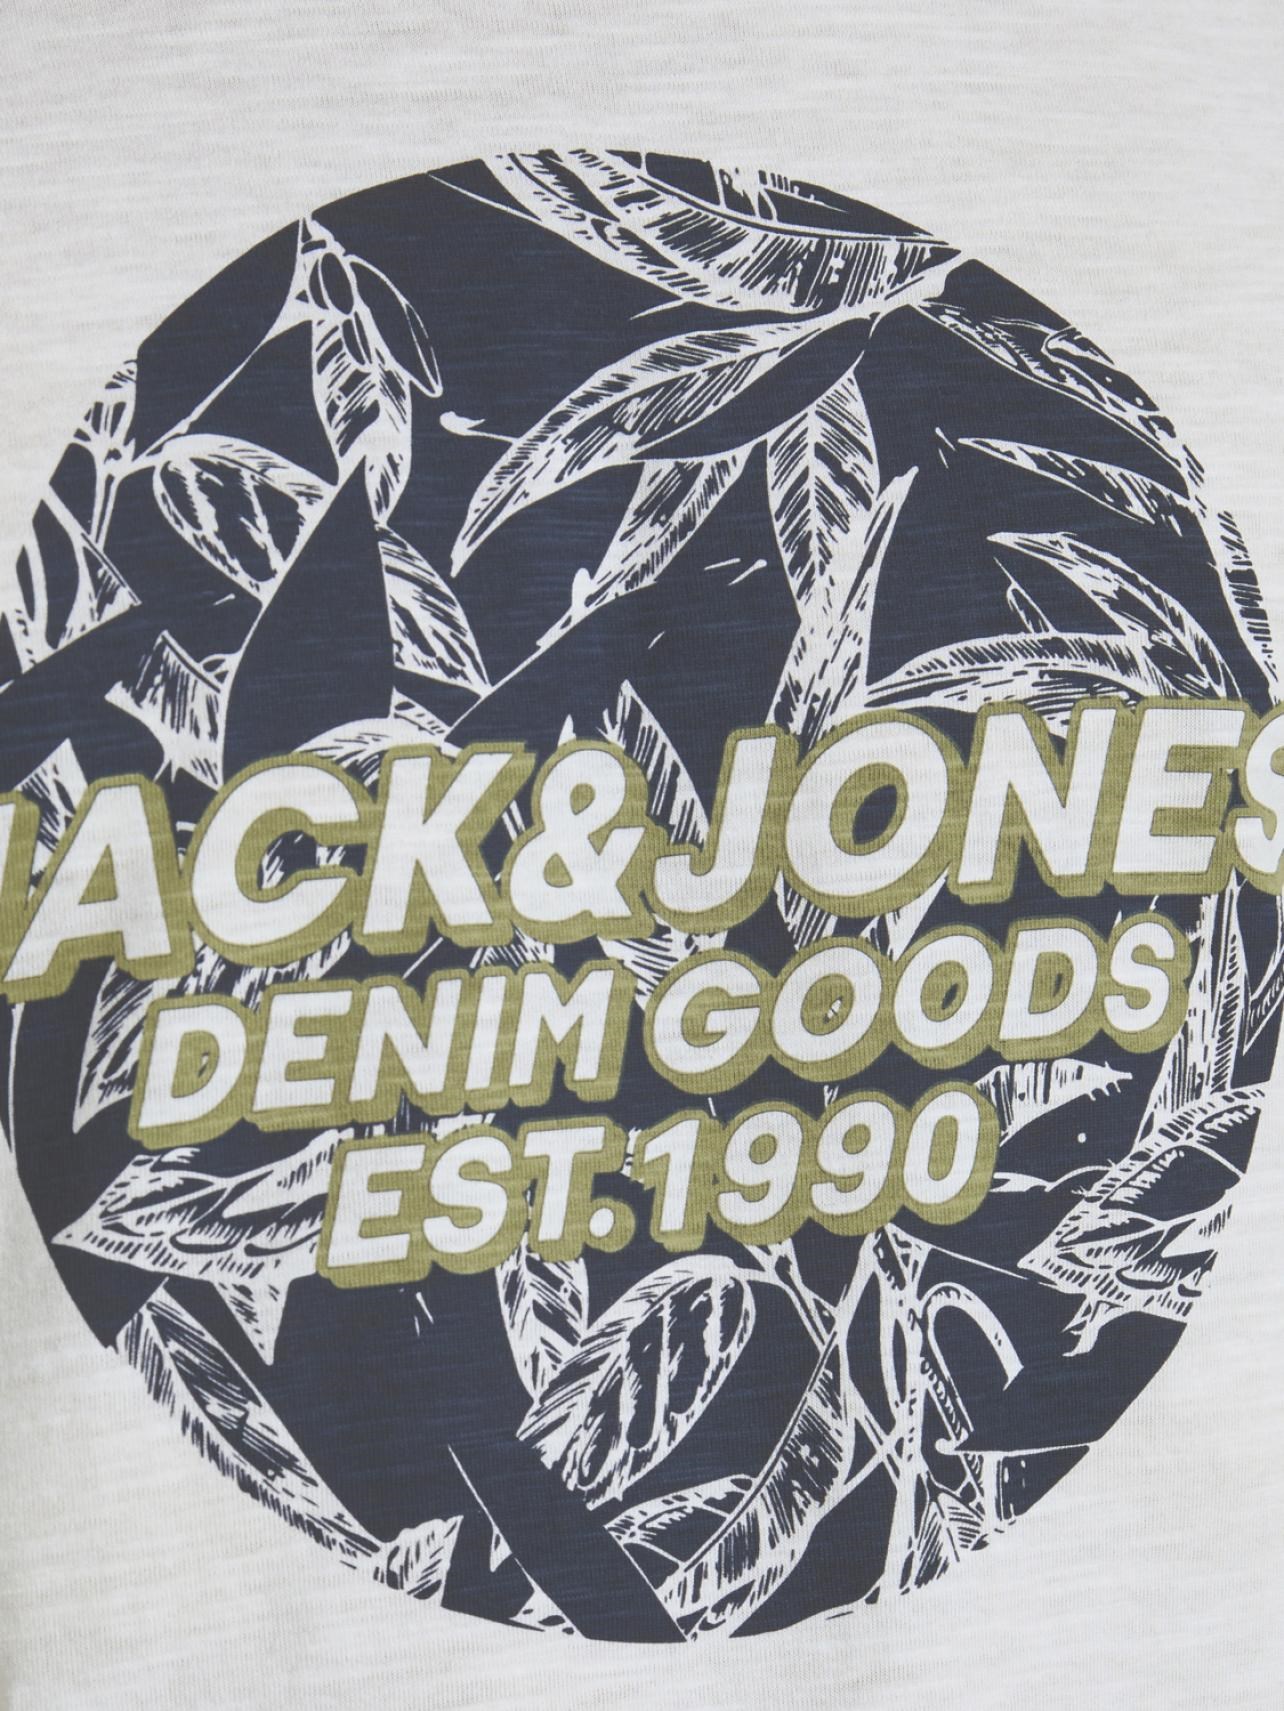 Jack Jones Erkek T-Shirt 12186282 White